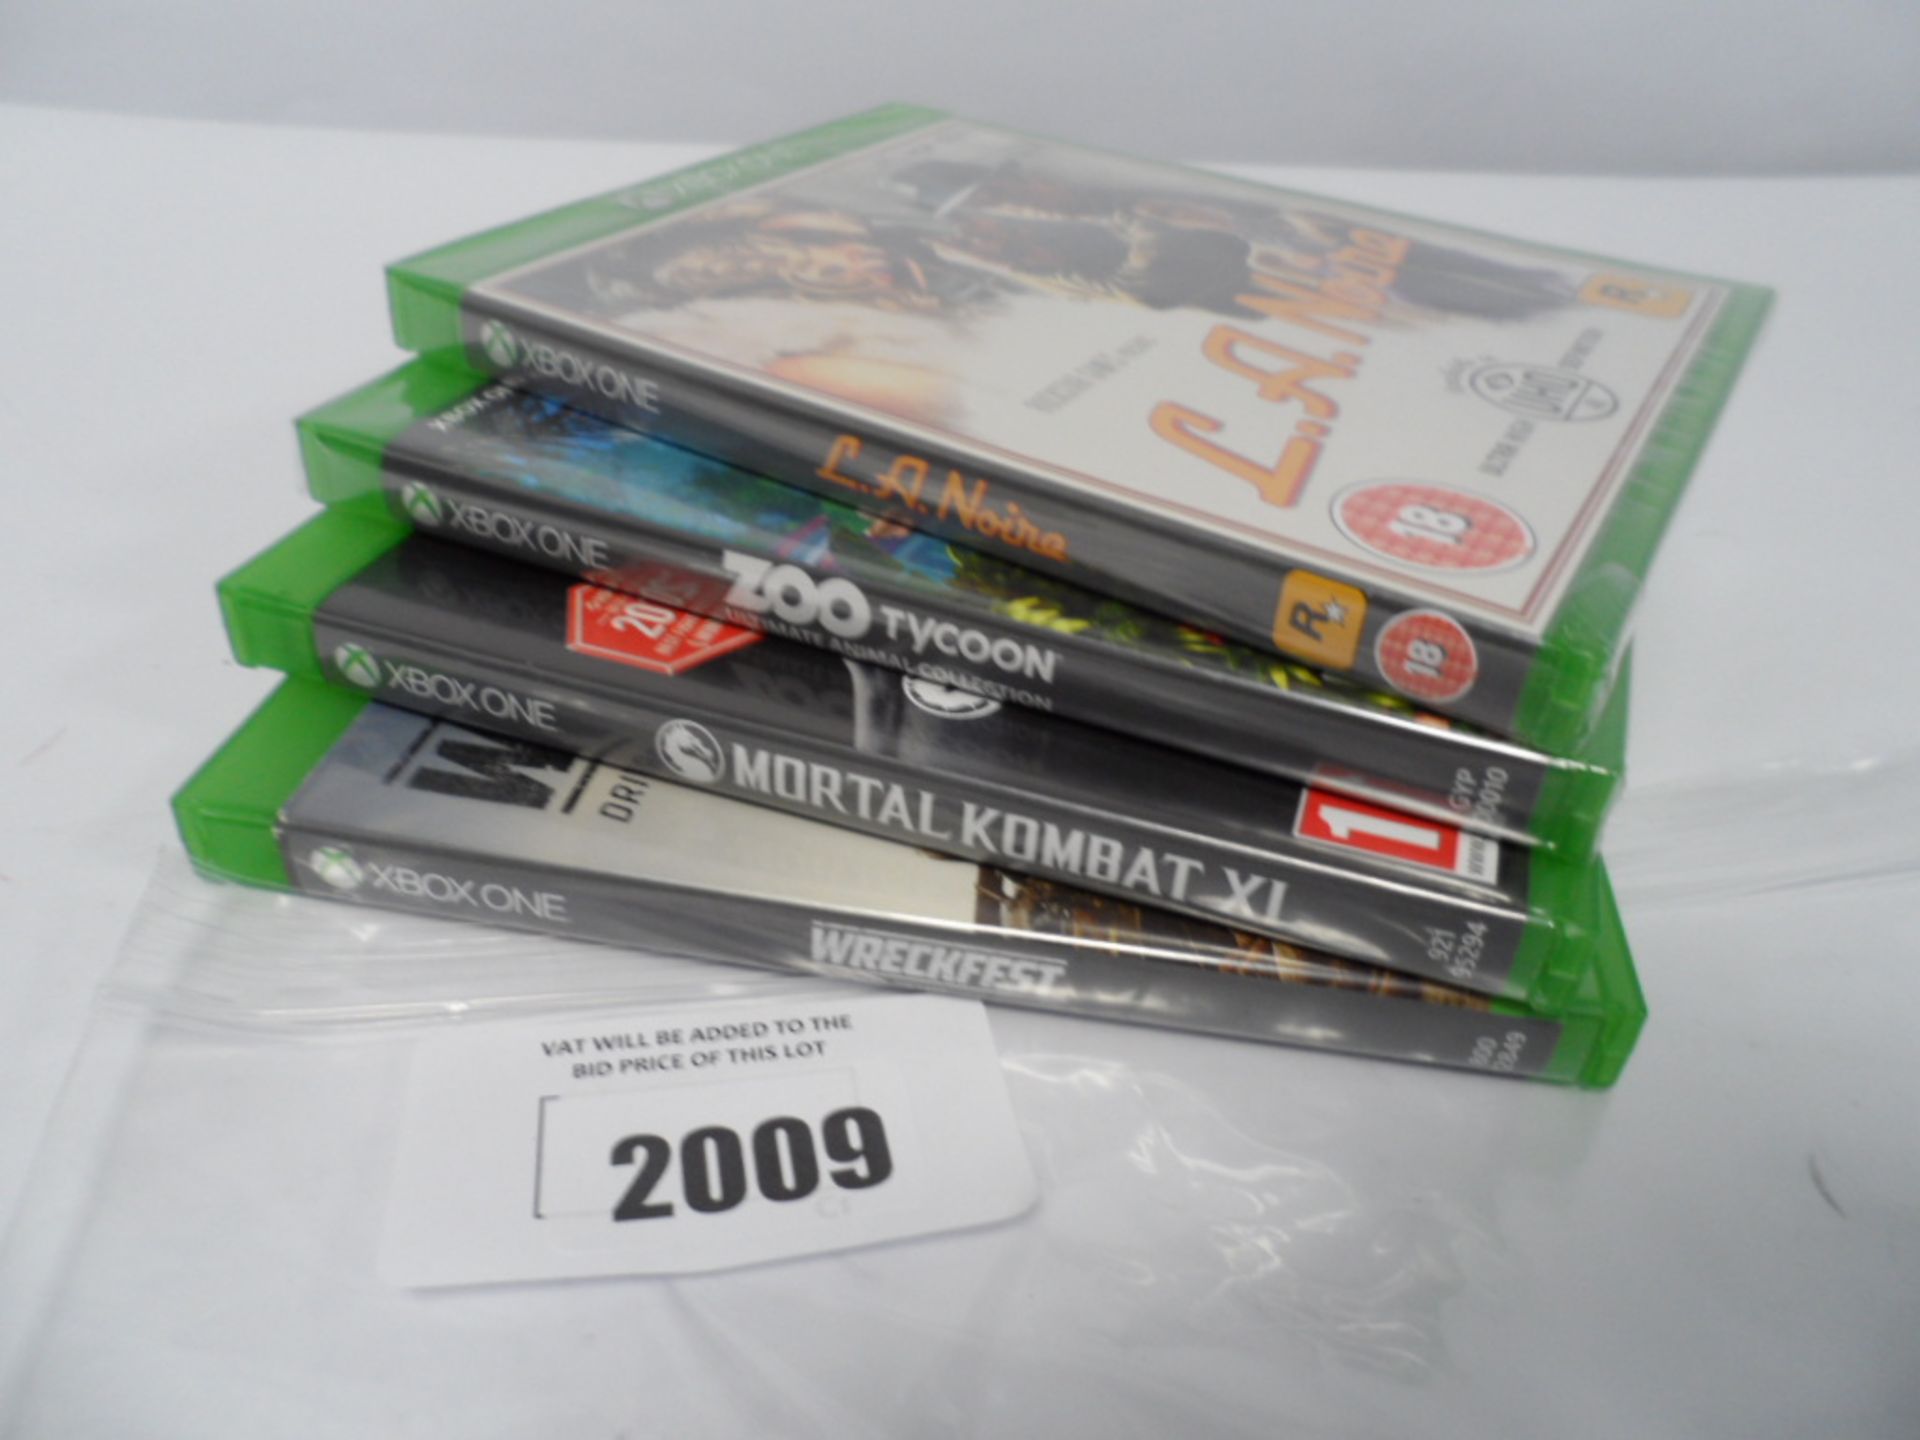 Four Xbox one games Wreckfest, Zoo tycoon, L.A Noire, Mortal Kombat XL.